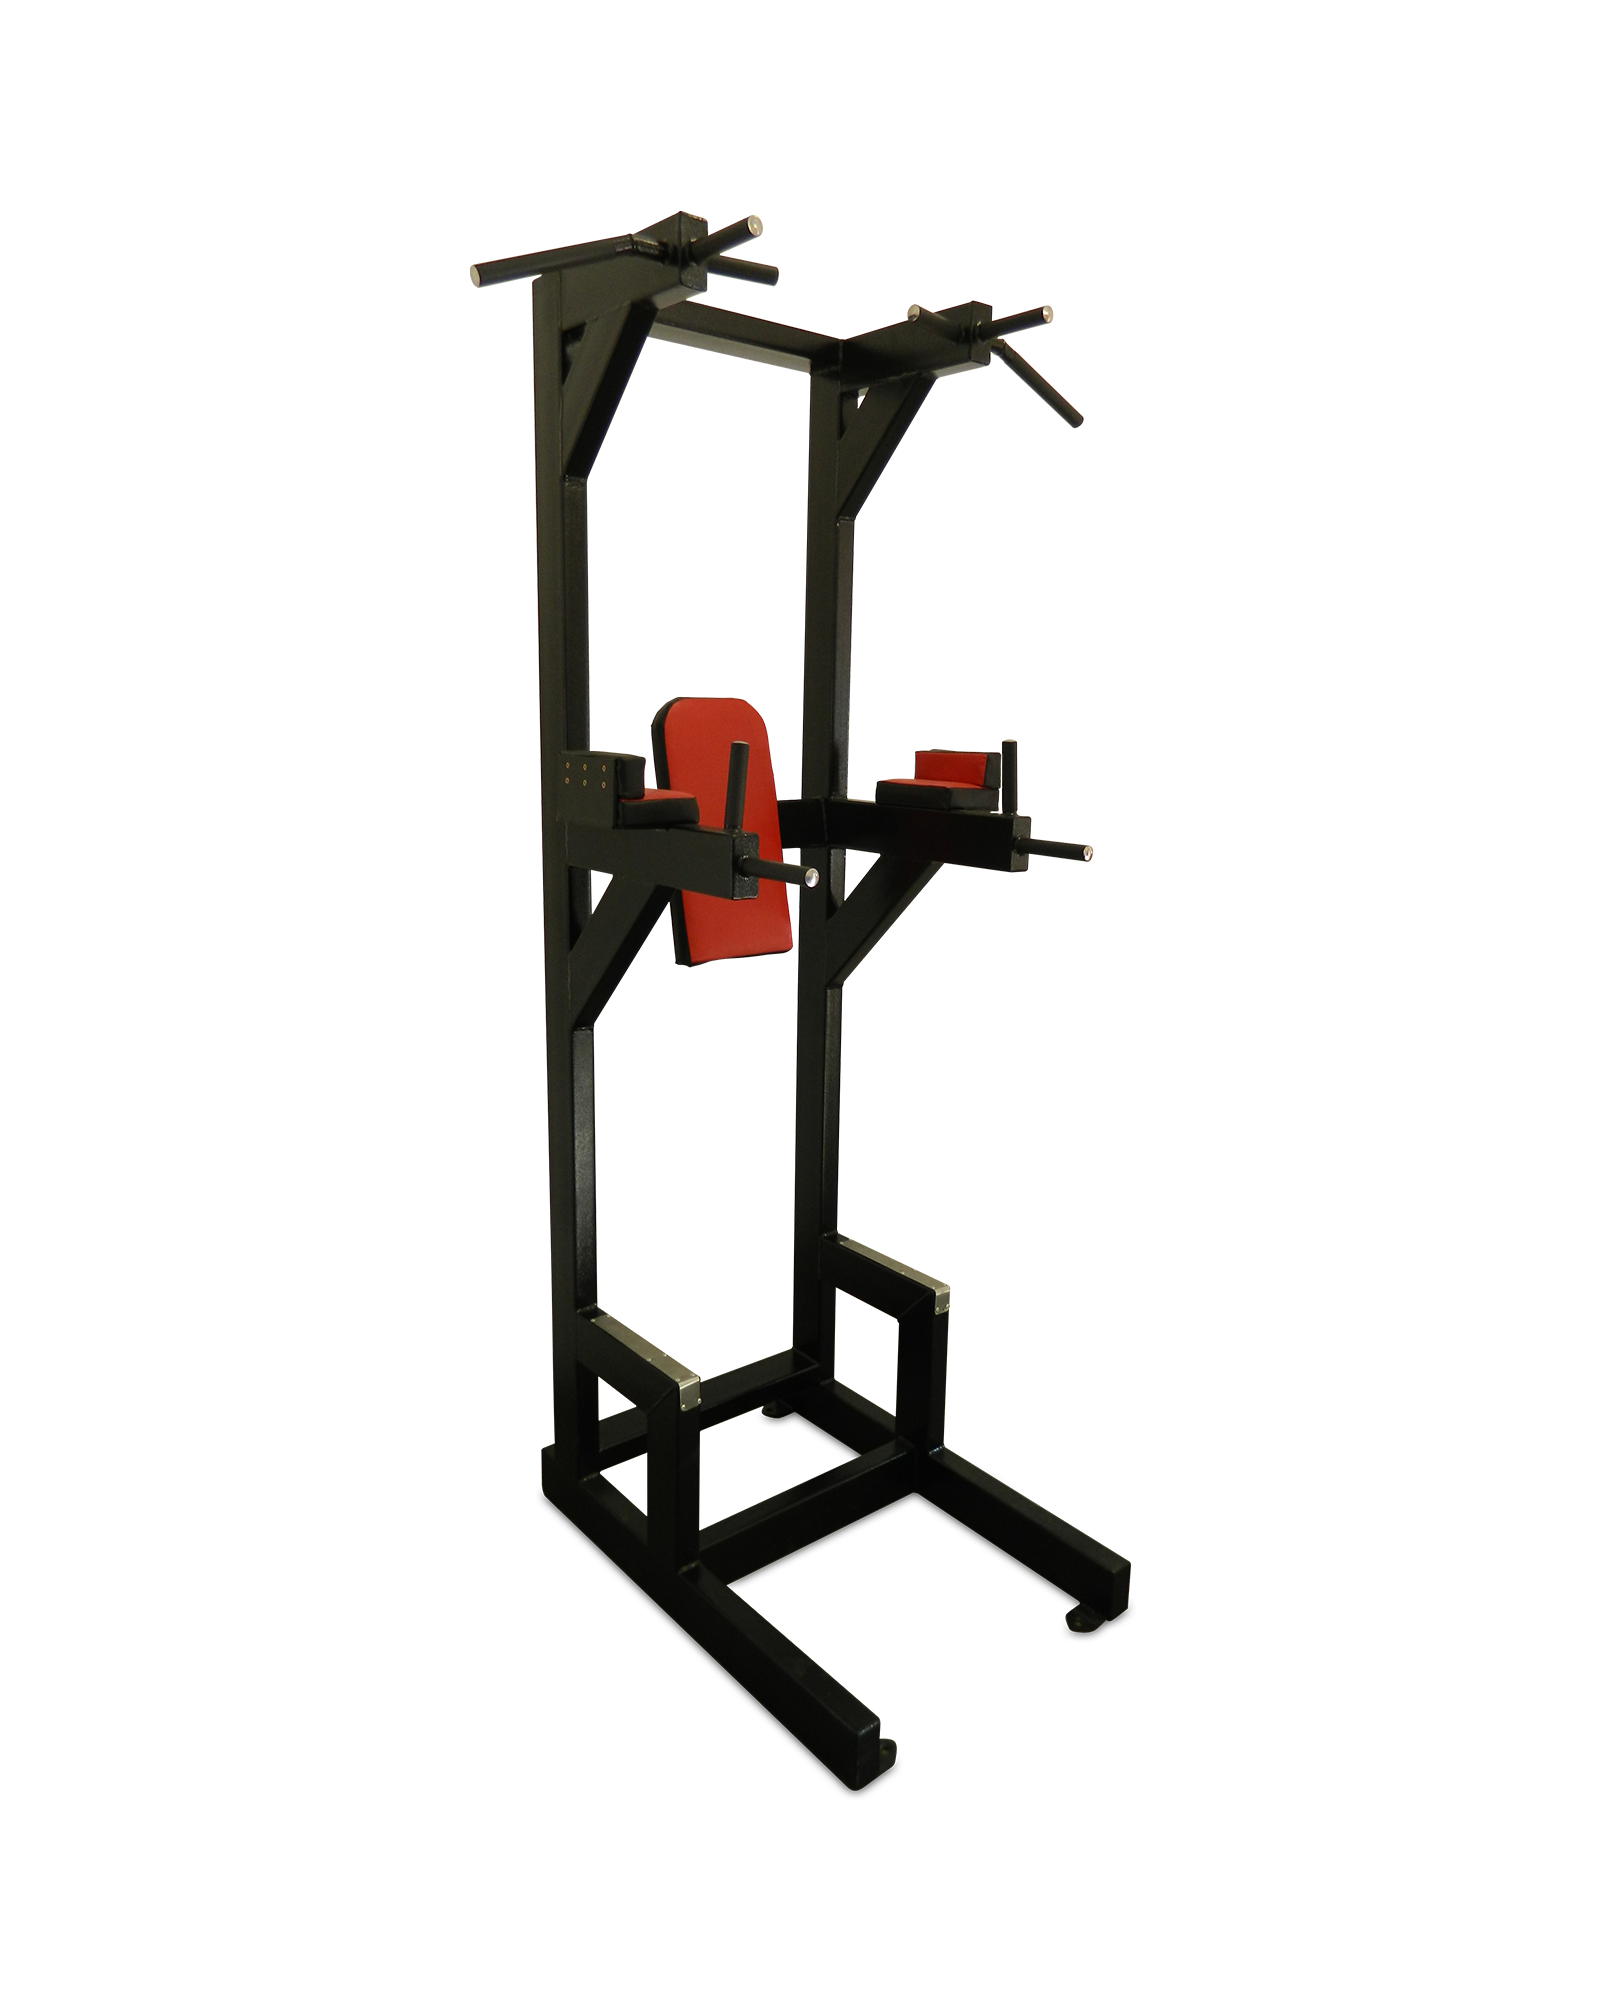 K3 Power Tower  Gym Steel - Professional Gym Equipment